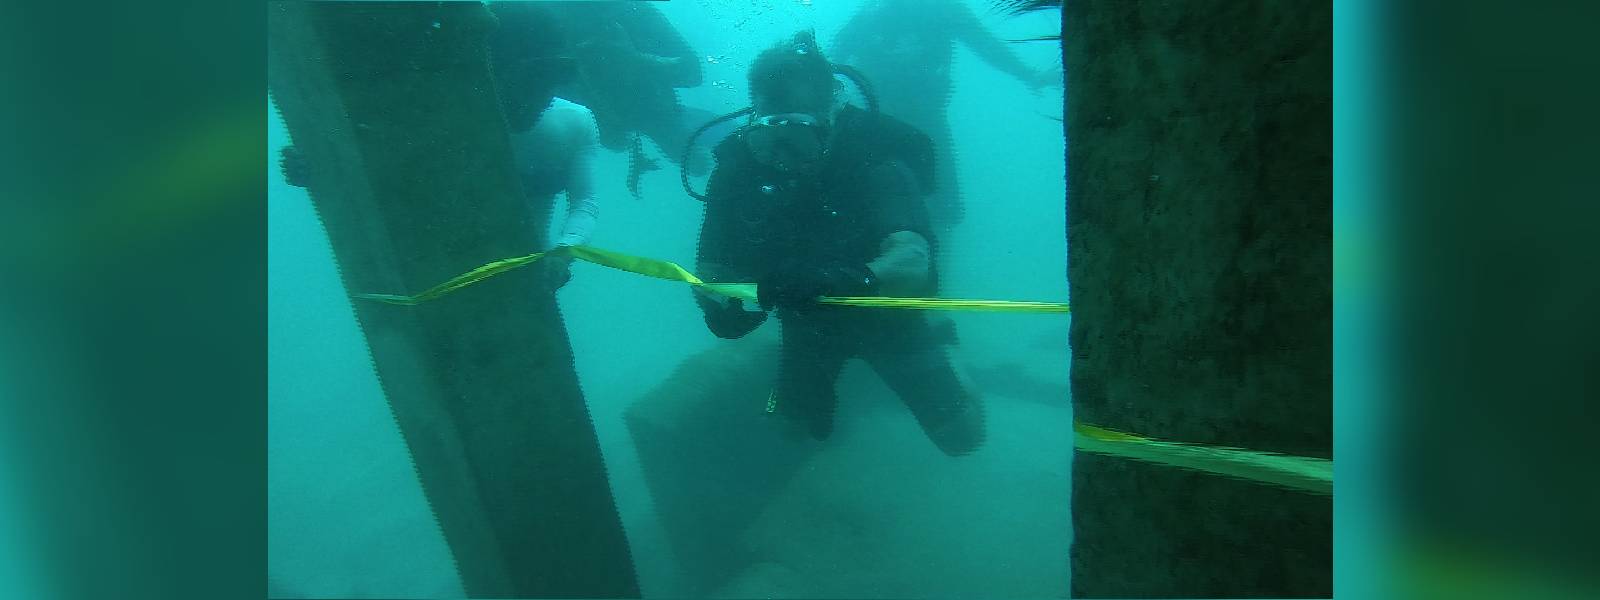 Sri Lanka’s first ever underwater museum opened